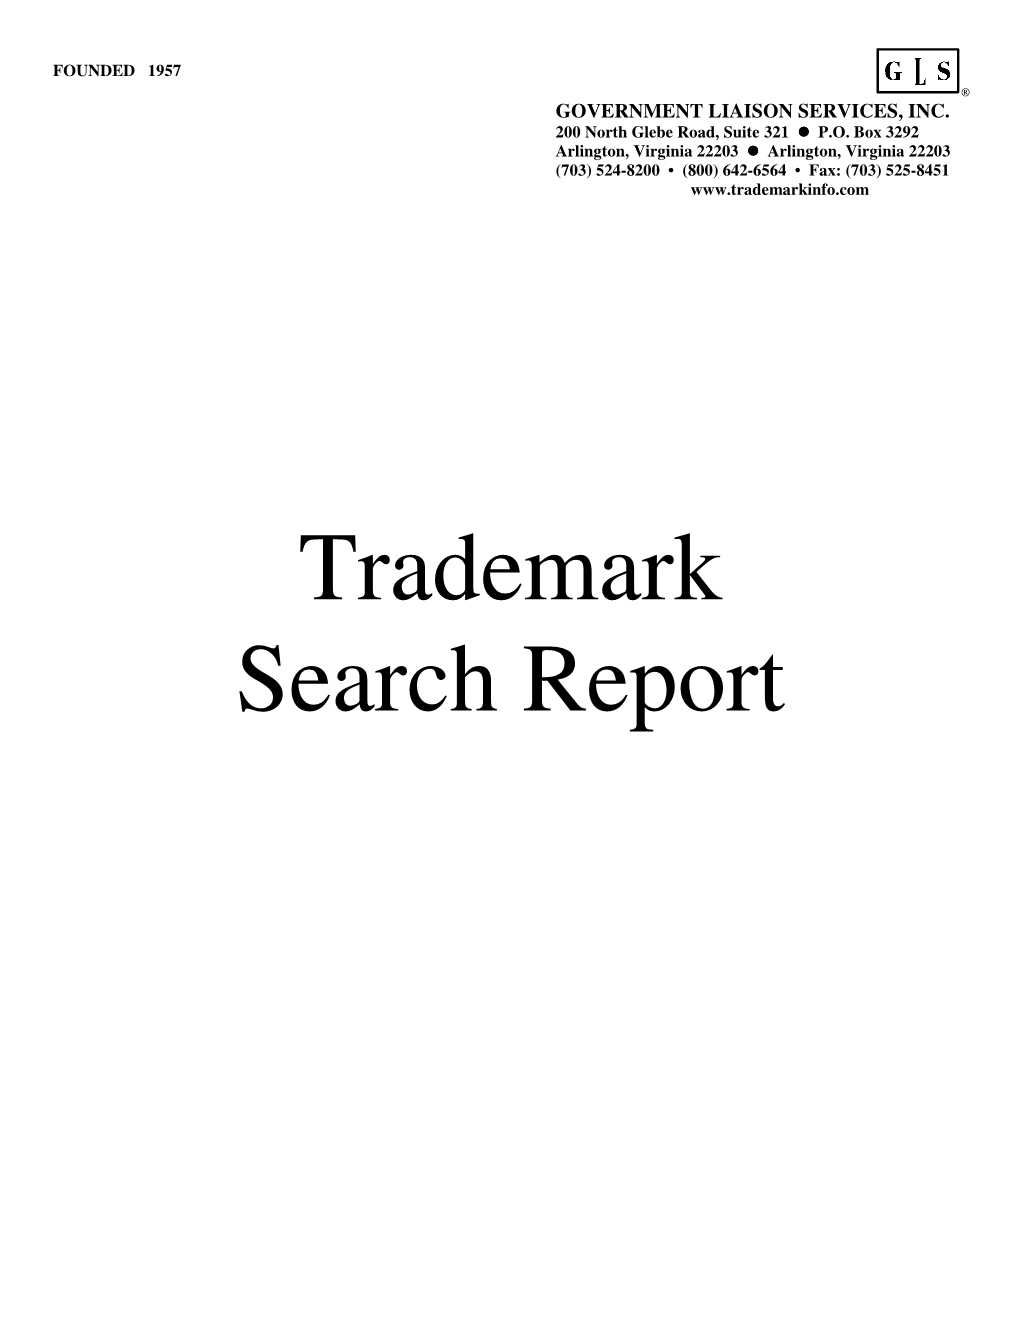 Trademark Search Report